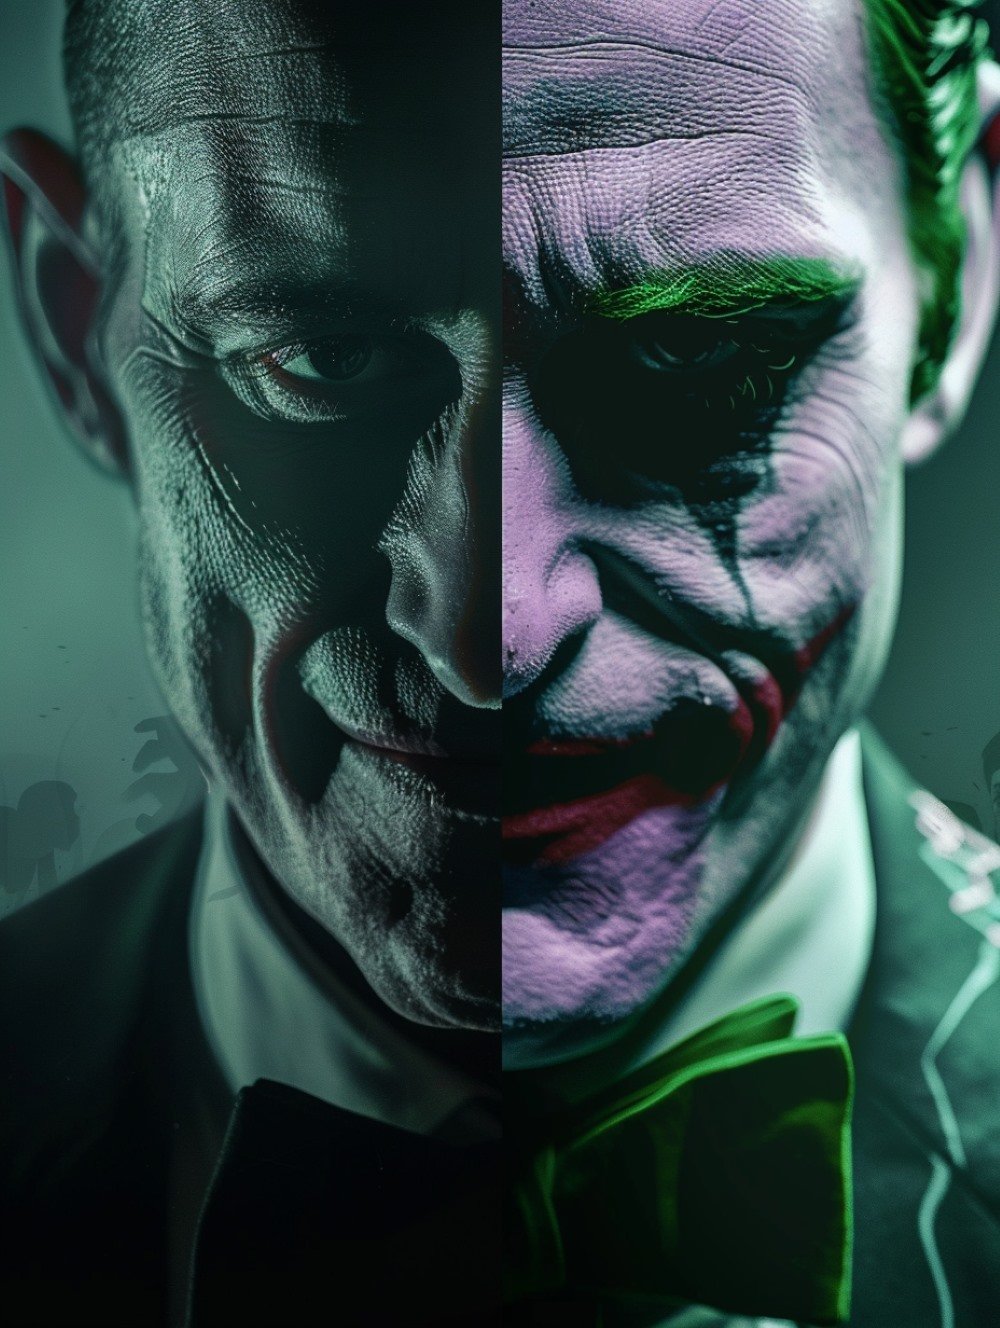 Alfred is the Joker